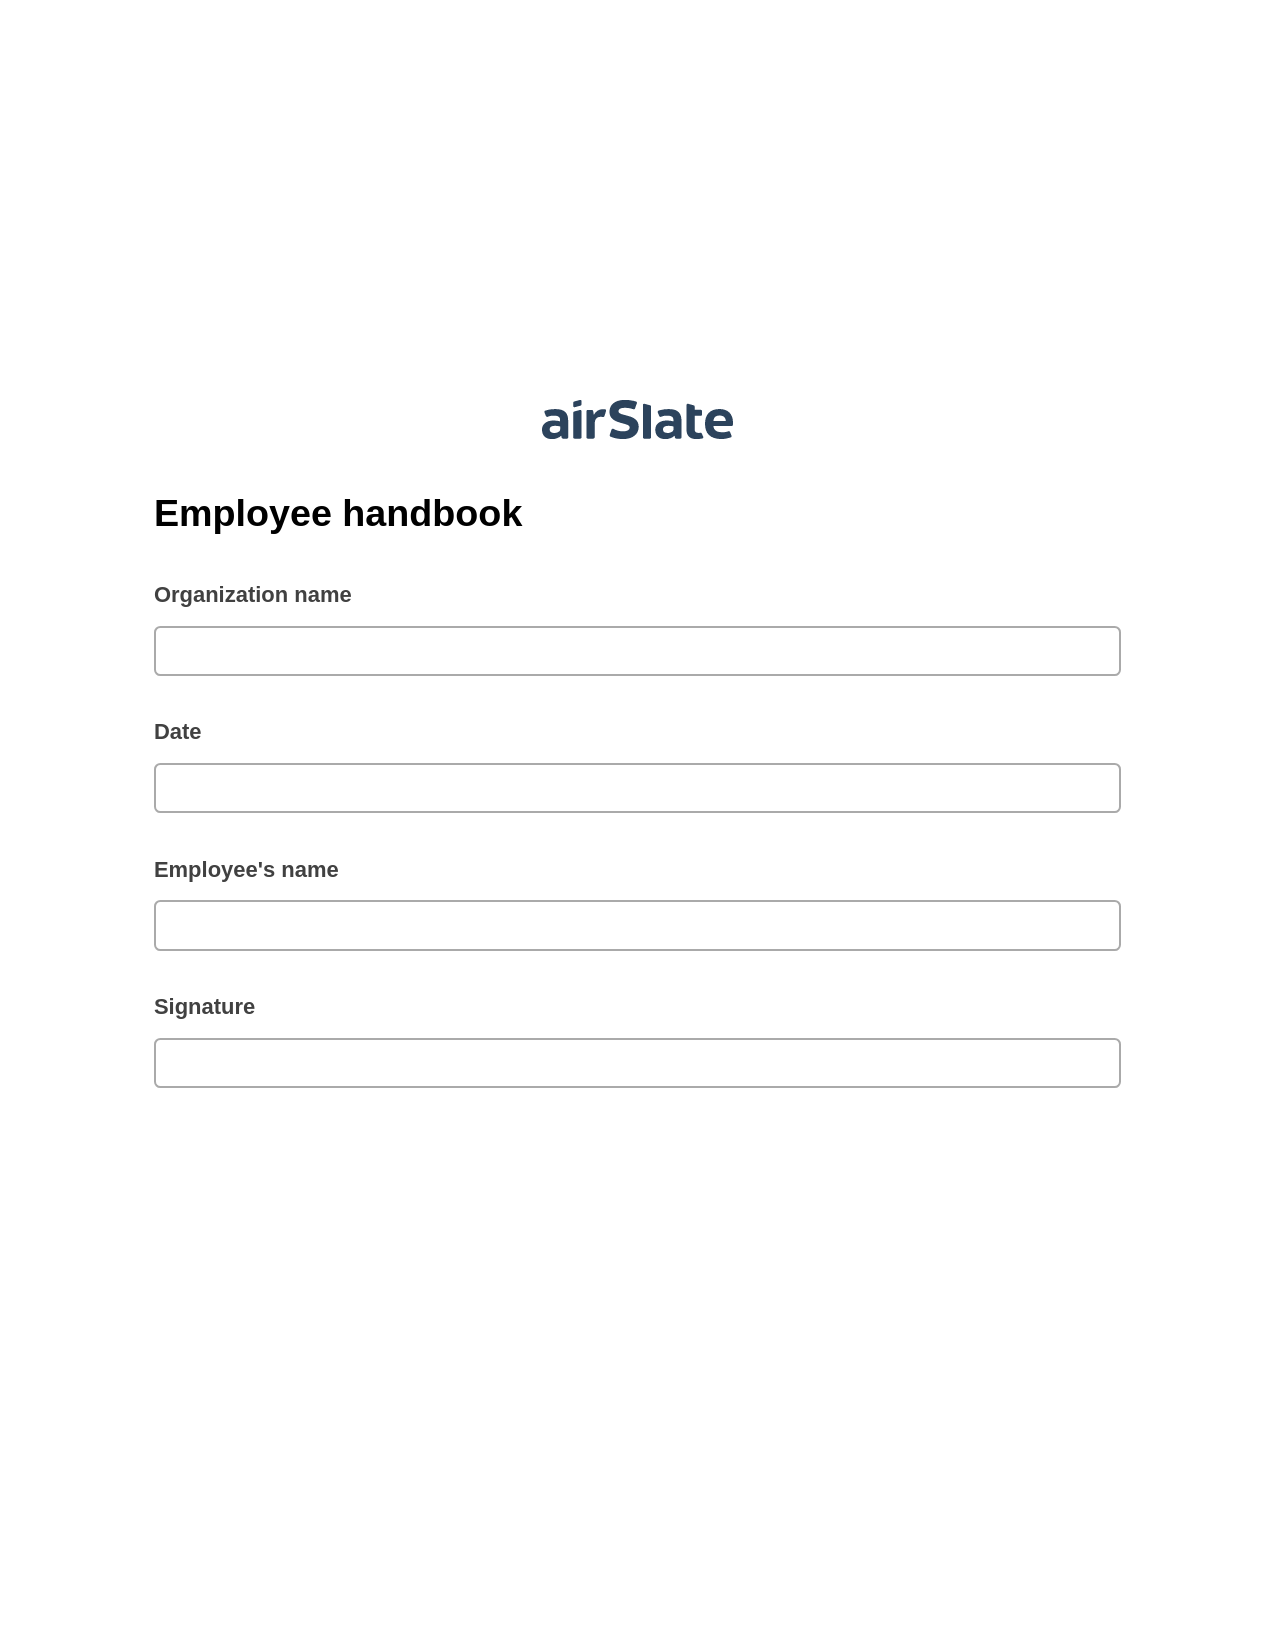 Multirole Employee handbook Pre-fill from NetSuite Records Bot, Webhook Bot, OneDrive Bot